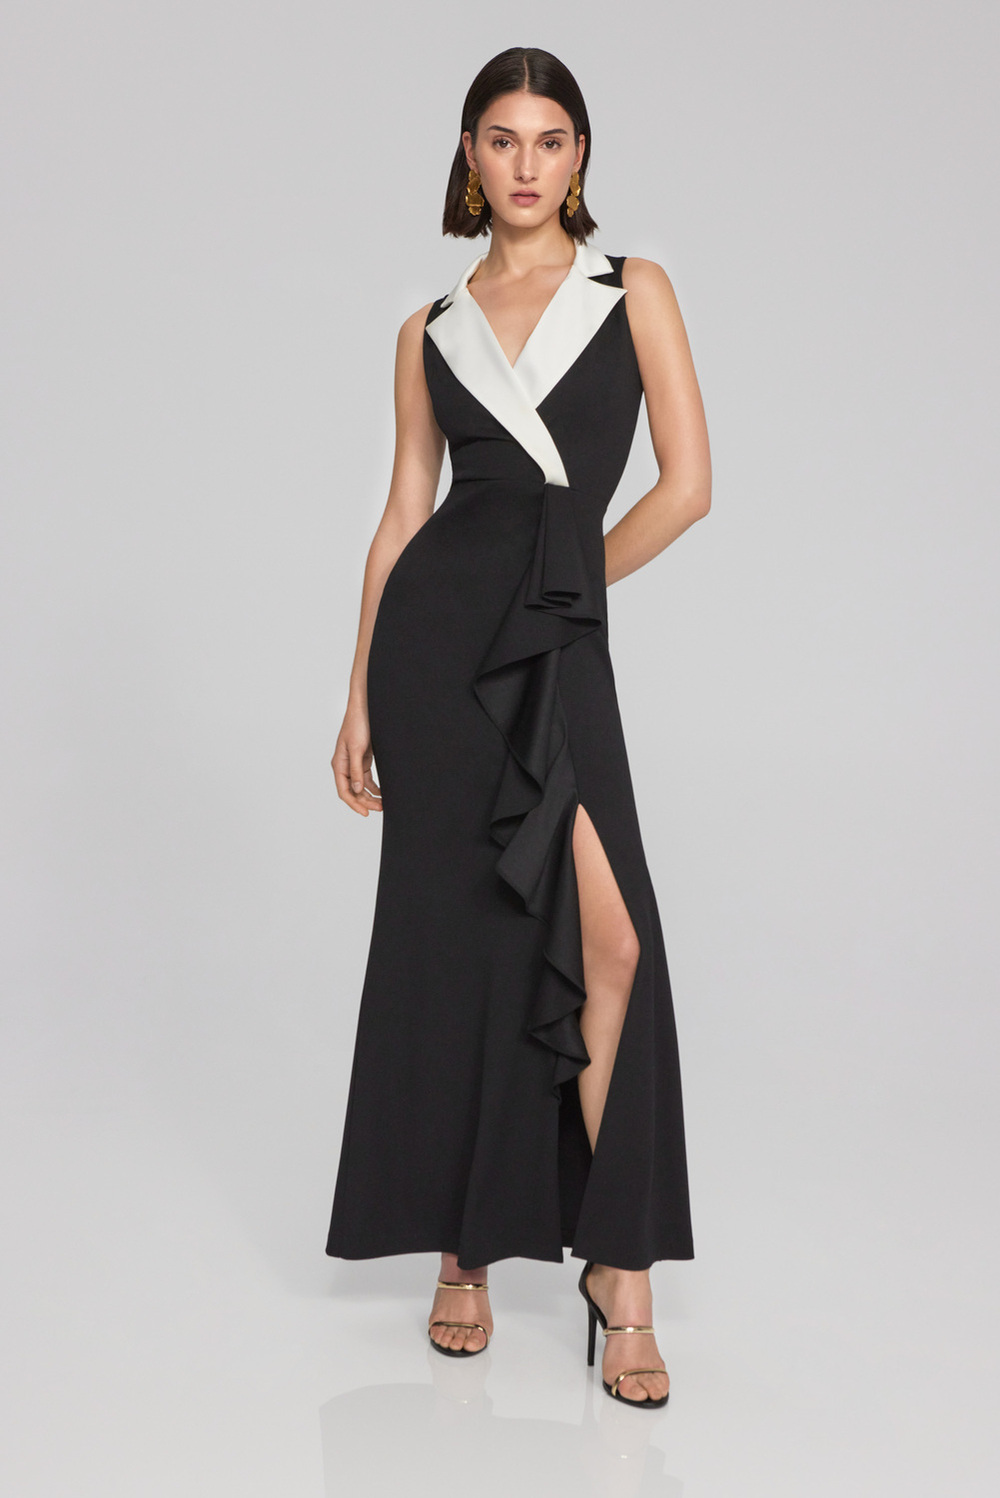 Ruffle Front Slit Dress Style 241712. Black/off White